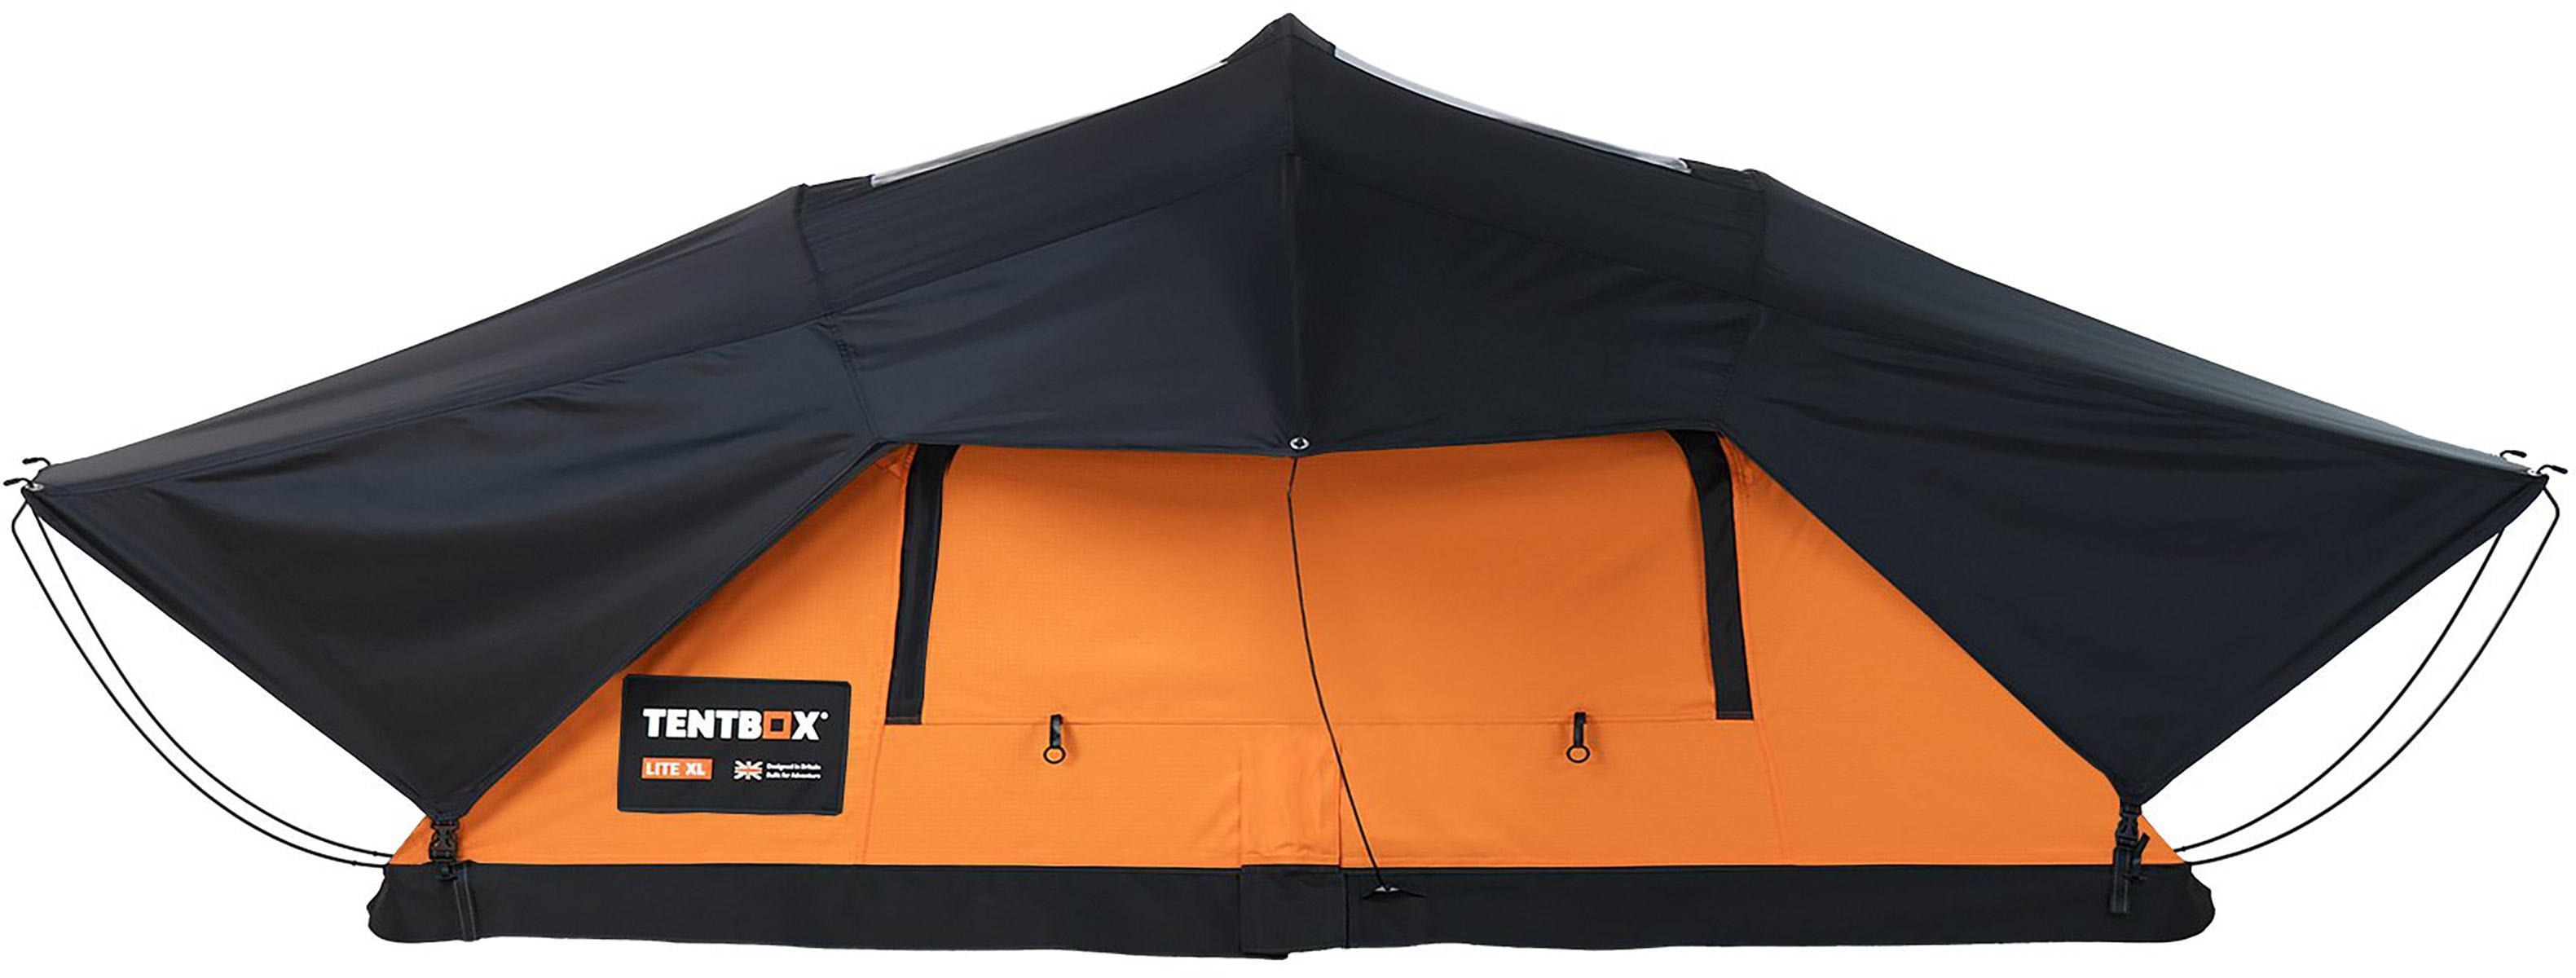 Tentbox Lite Xl 4 Person Roof Tent - Sunset Orange